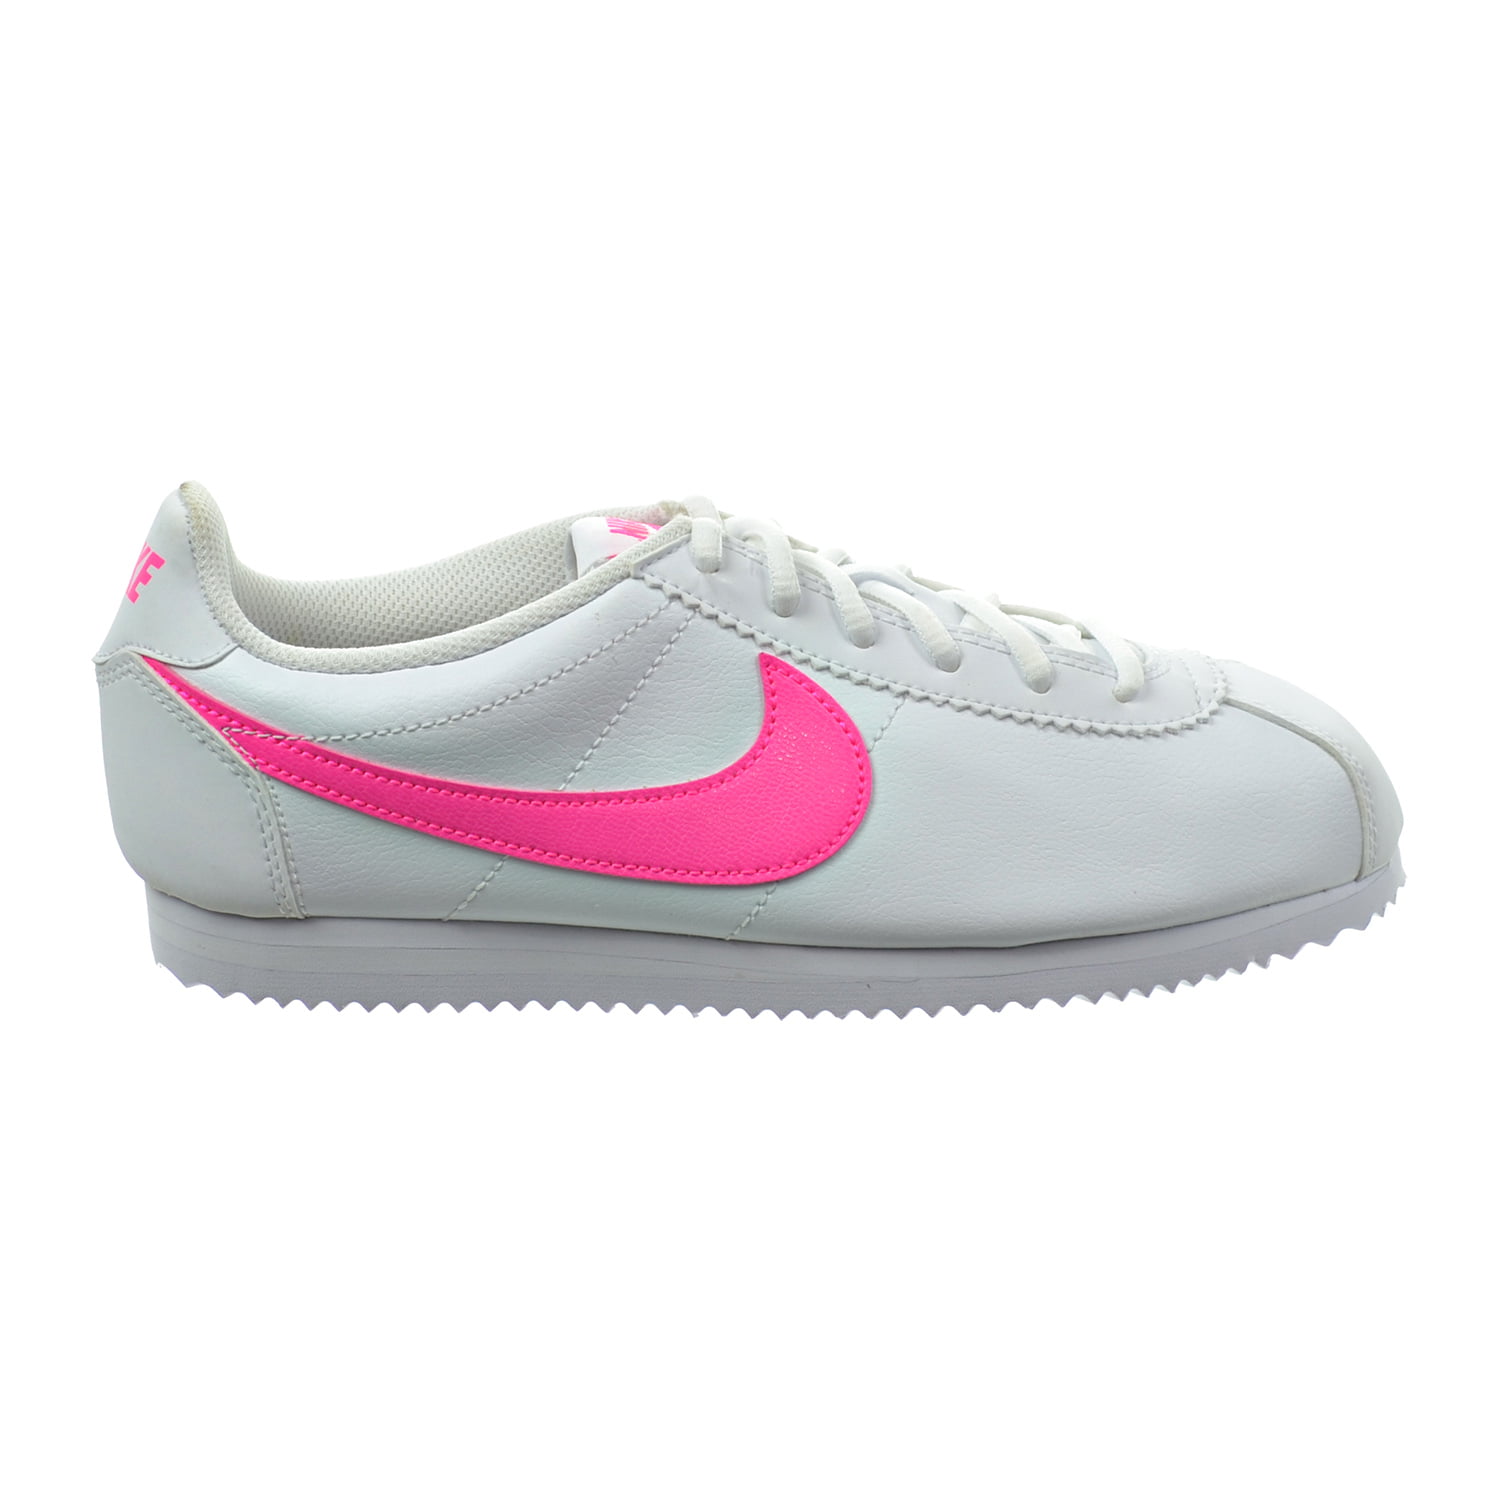 Nike Cortez Big Kid's White/Pink Blast 749502-106 (6 US) Walmart.com